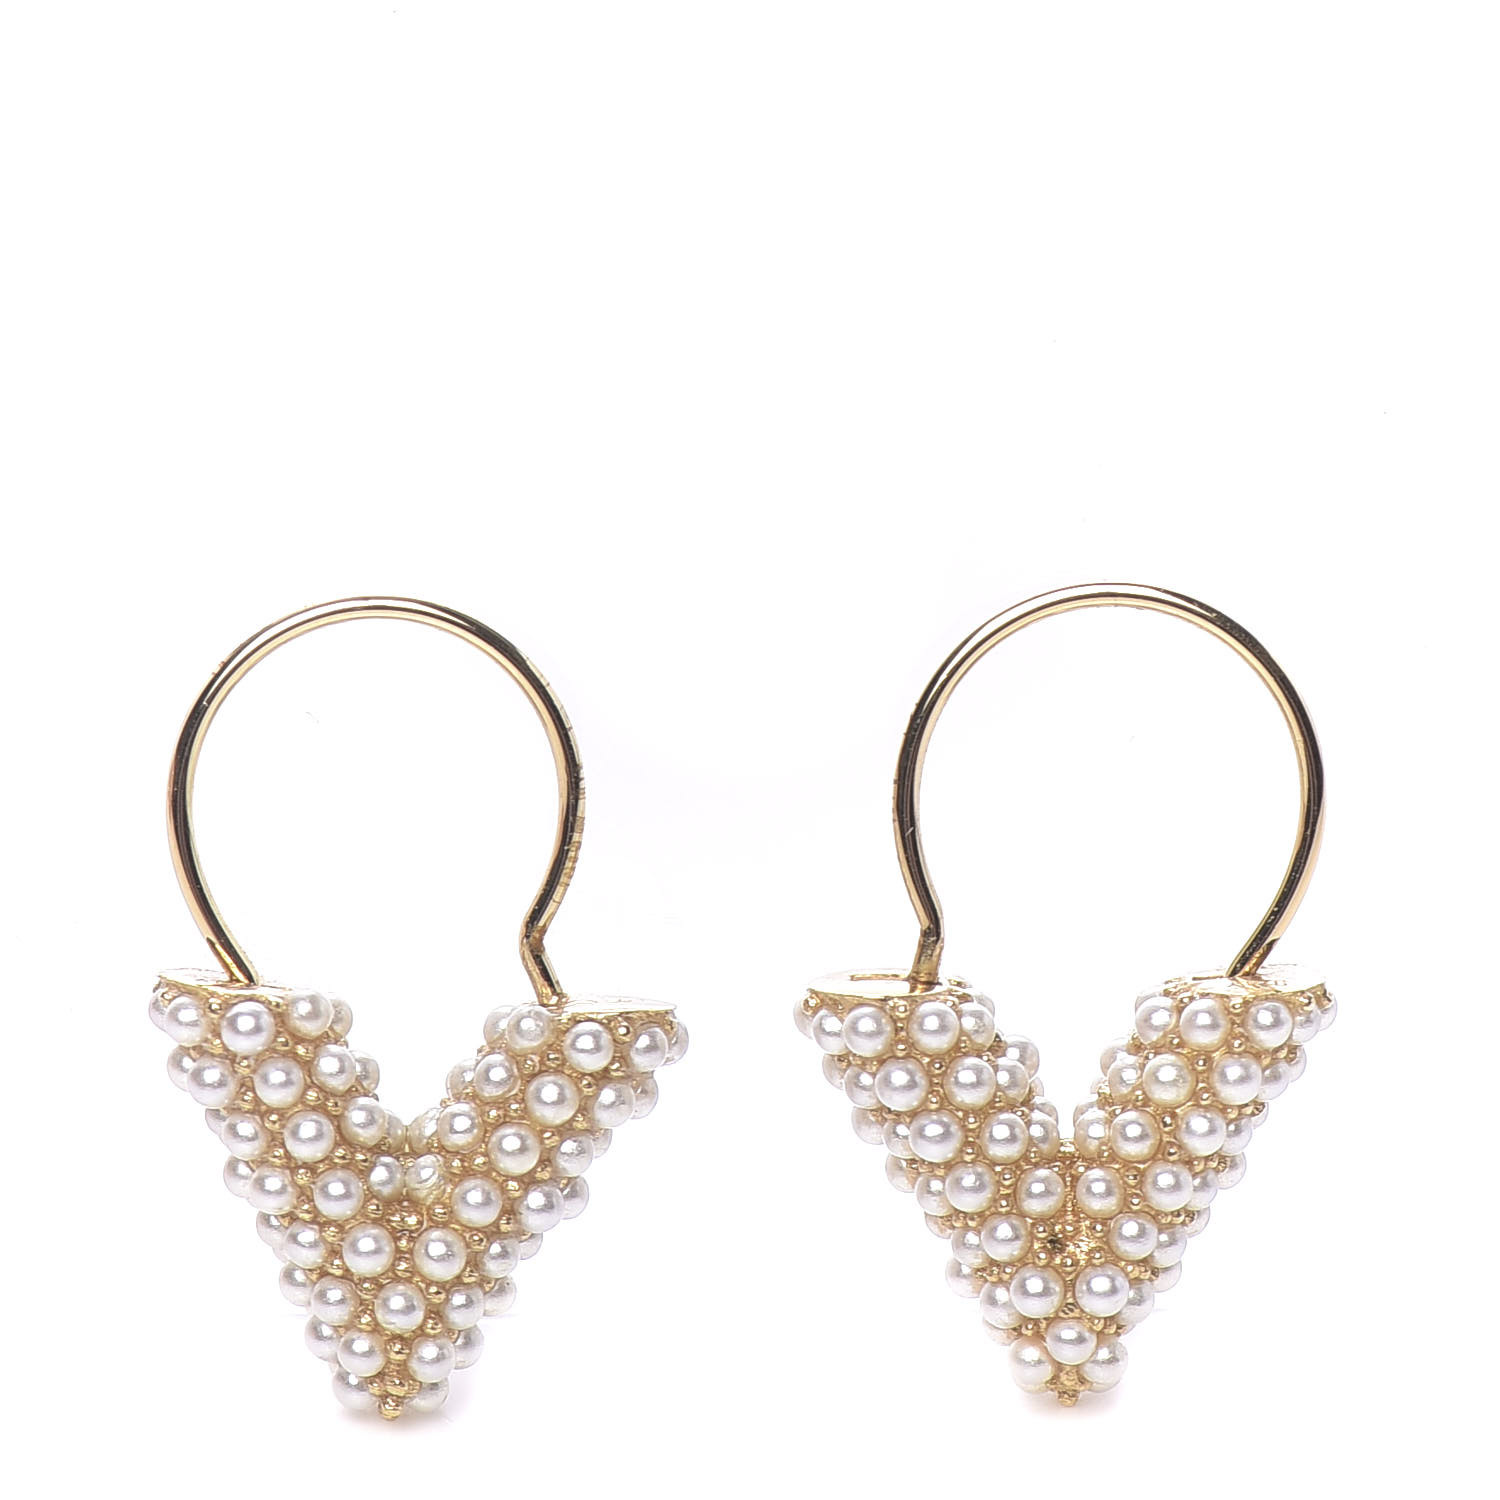 Louis Vuitton Essential V Guilloche Gold-Tone Earrings